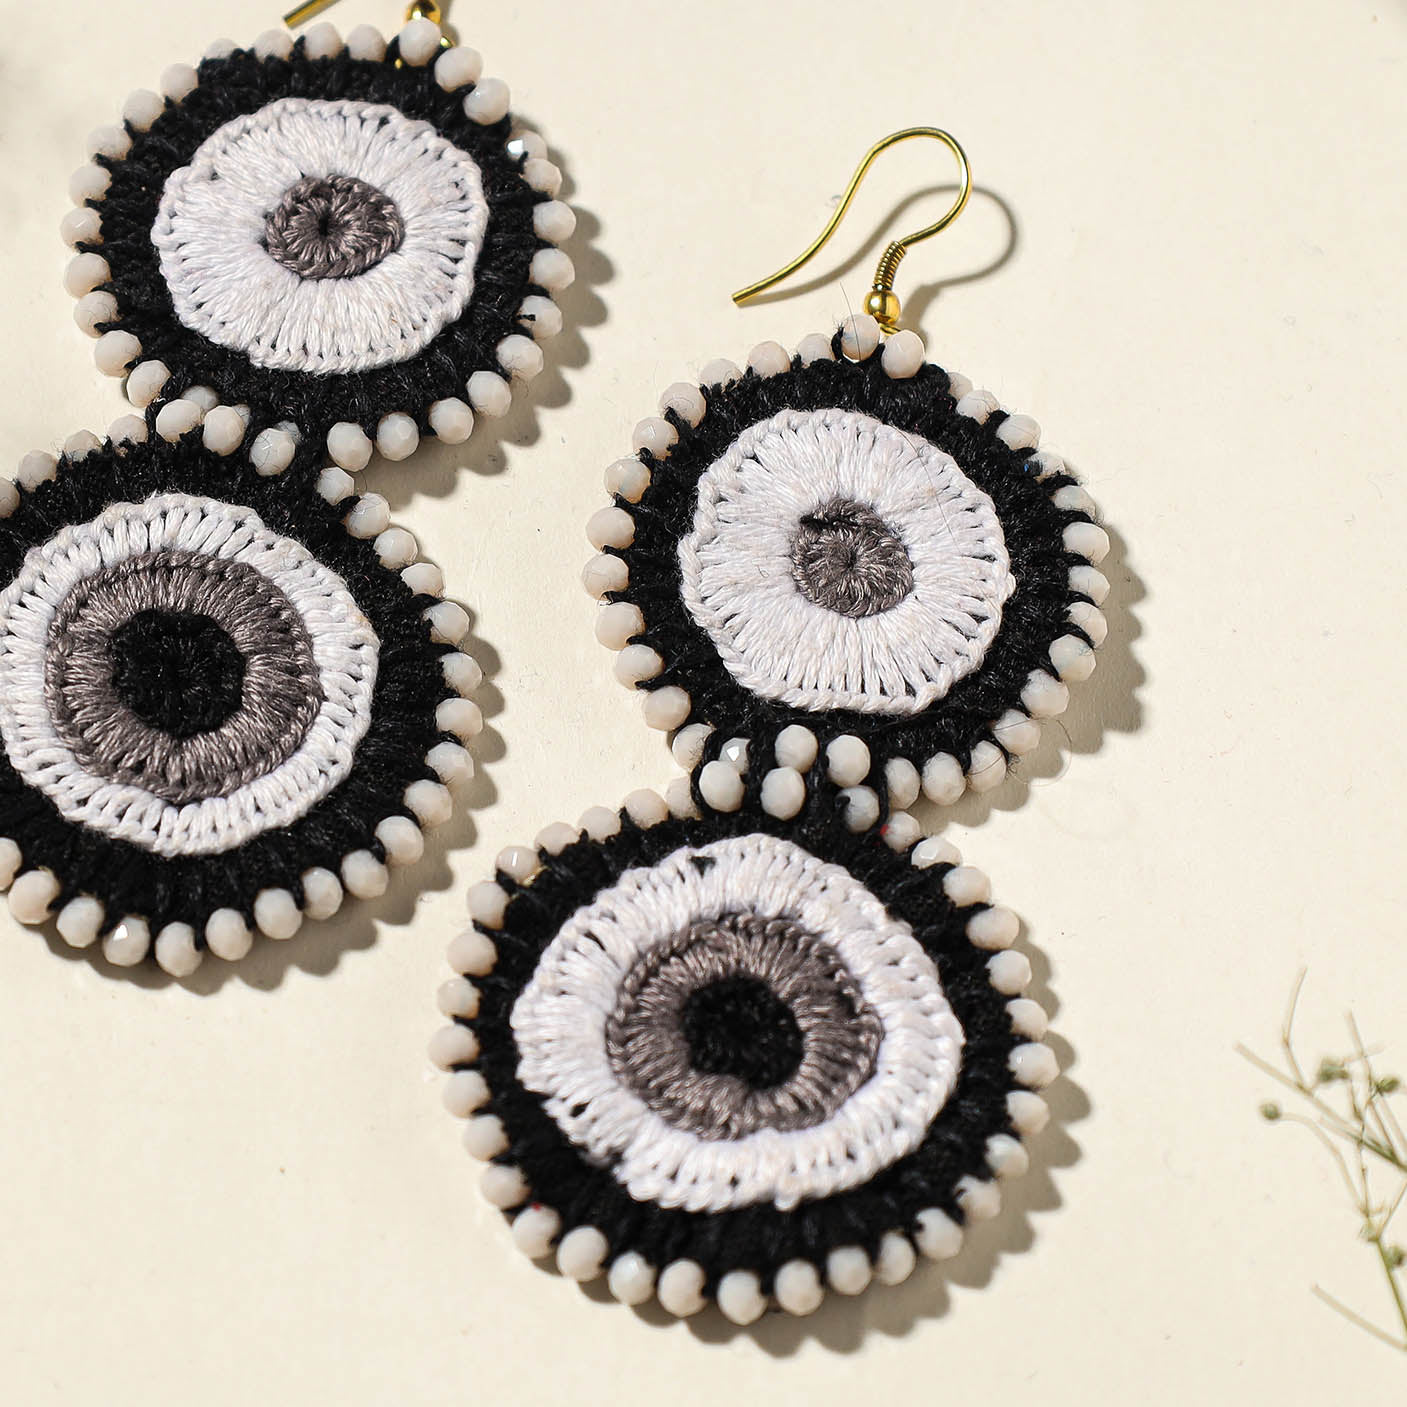 Hand Embroidered Fabart Beadwork Earrings by Rangila Dhaga